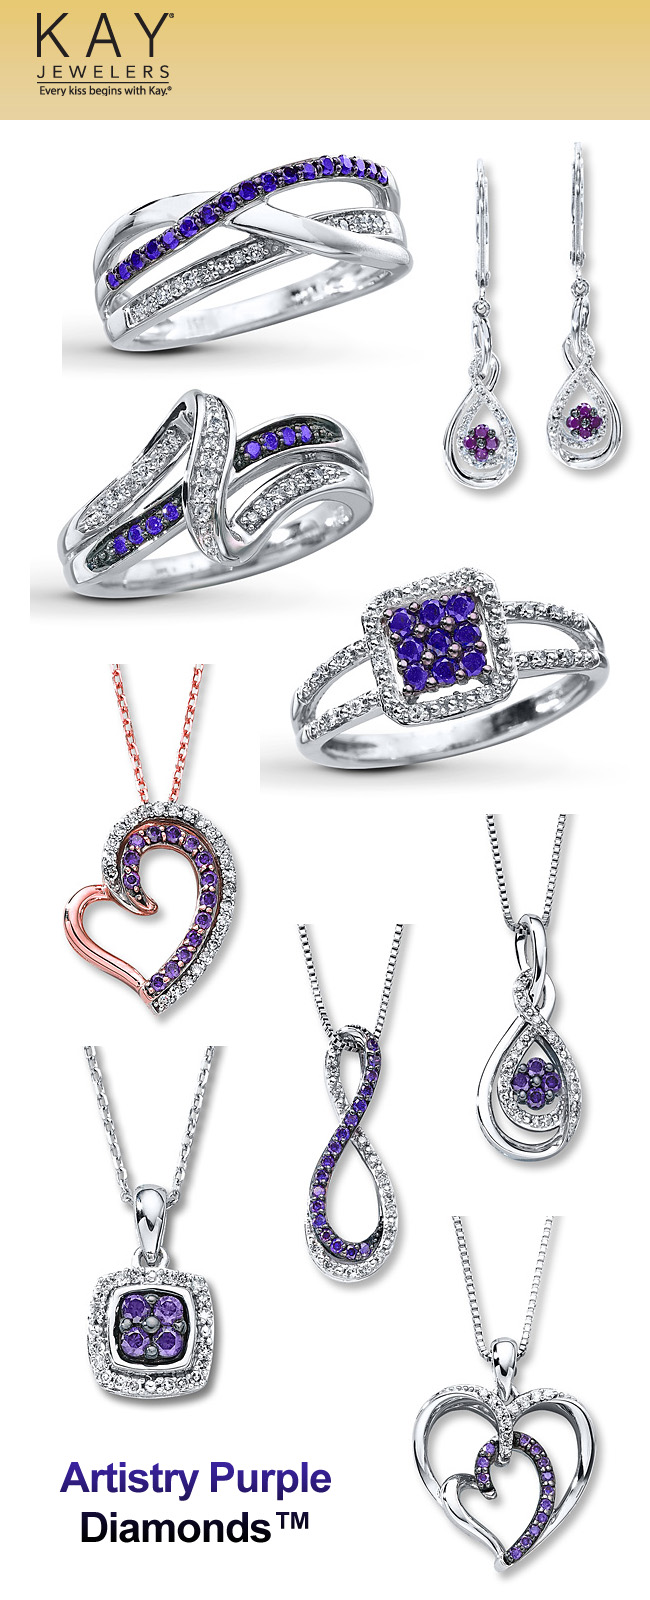 Kay Jewelers Artistry Purple Diamonds